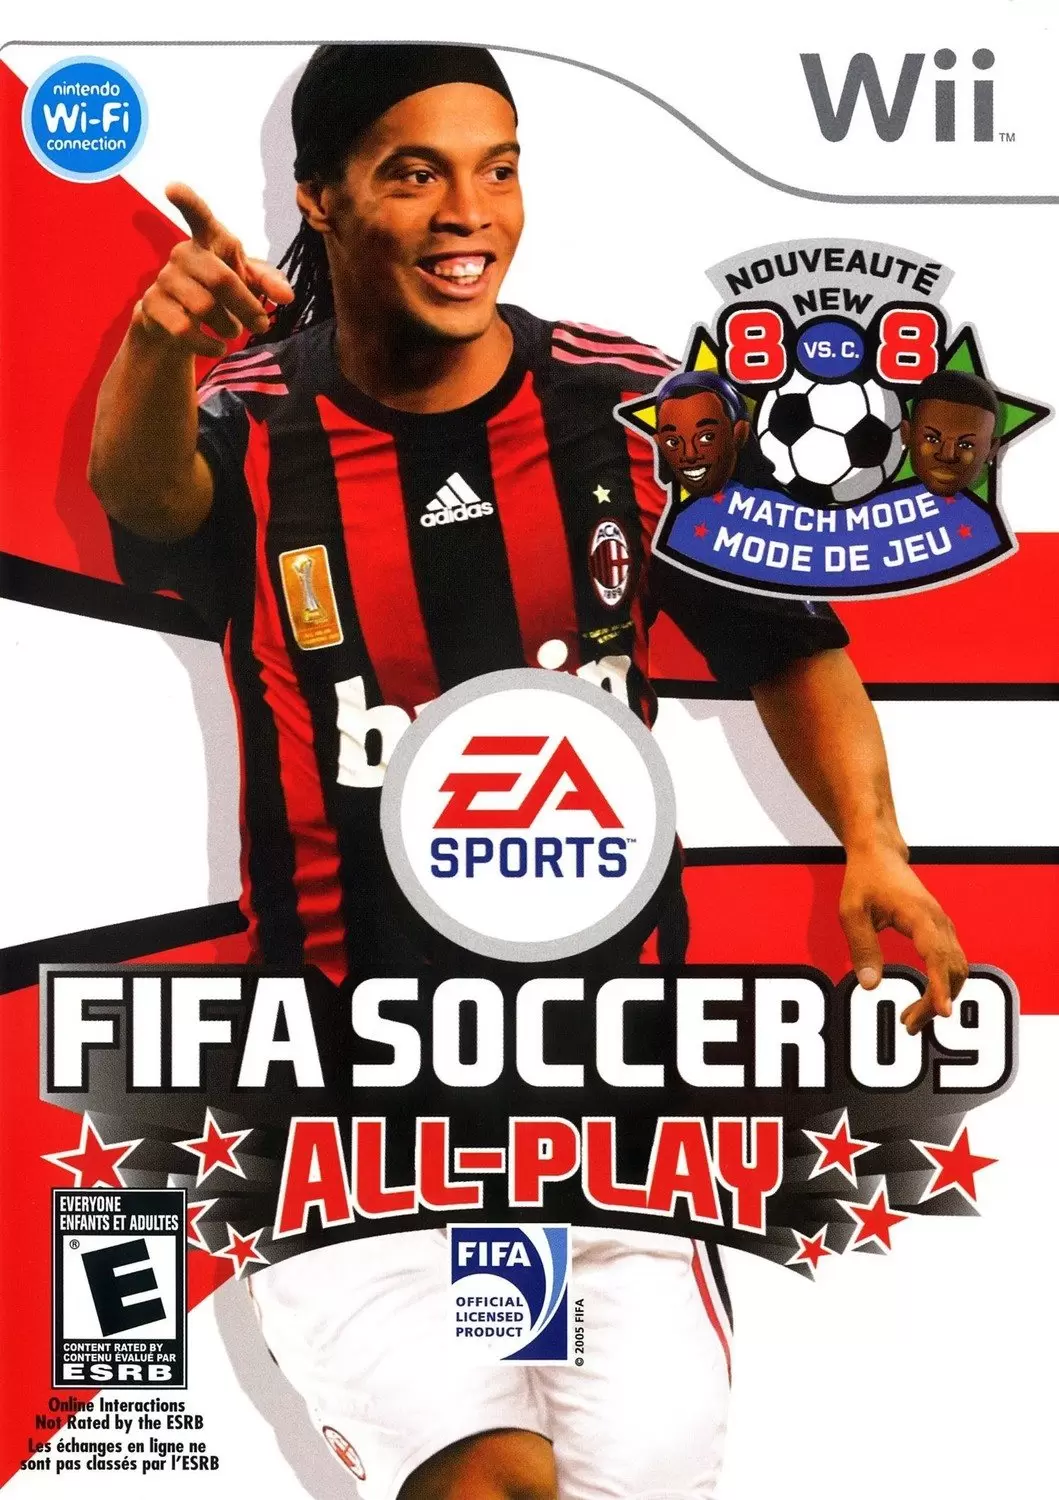 Nintendo Wii Games - FIFA Soccer 09